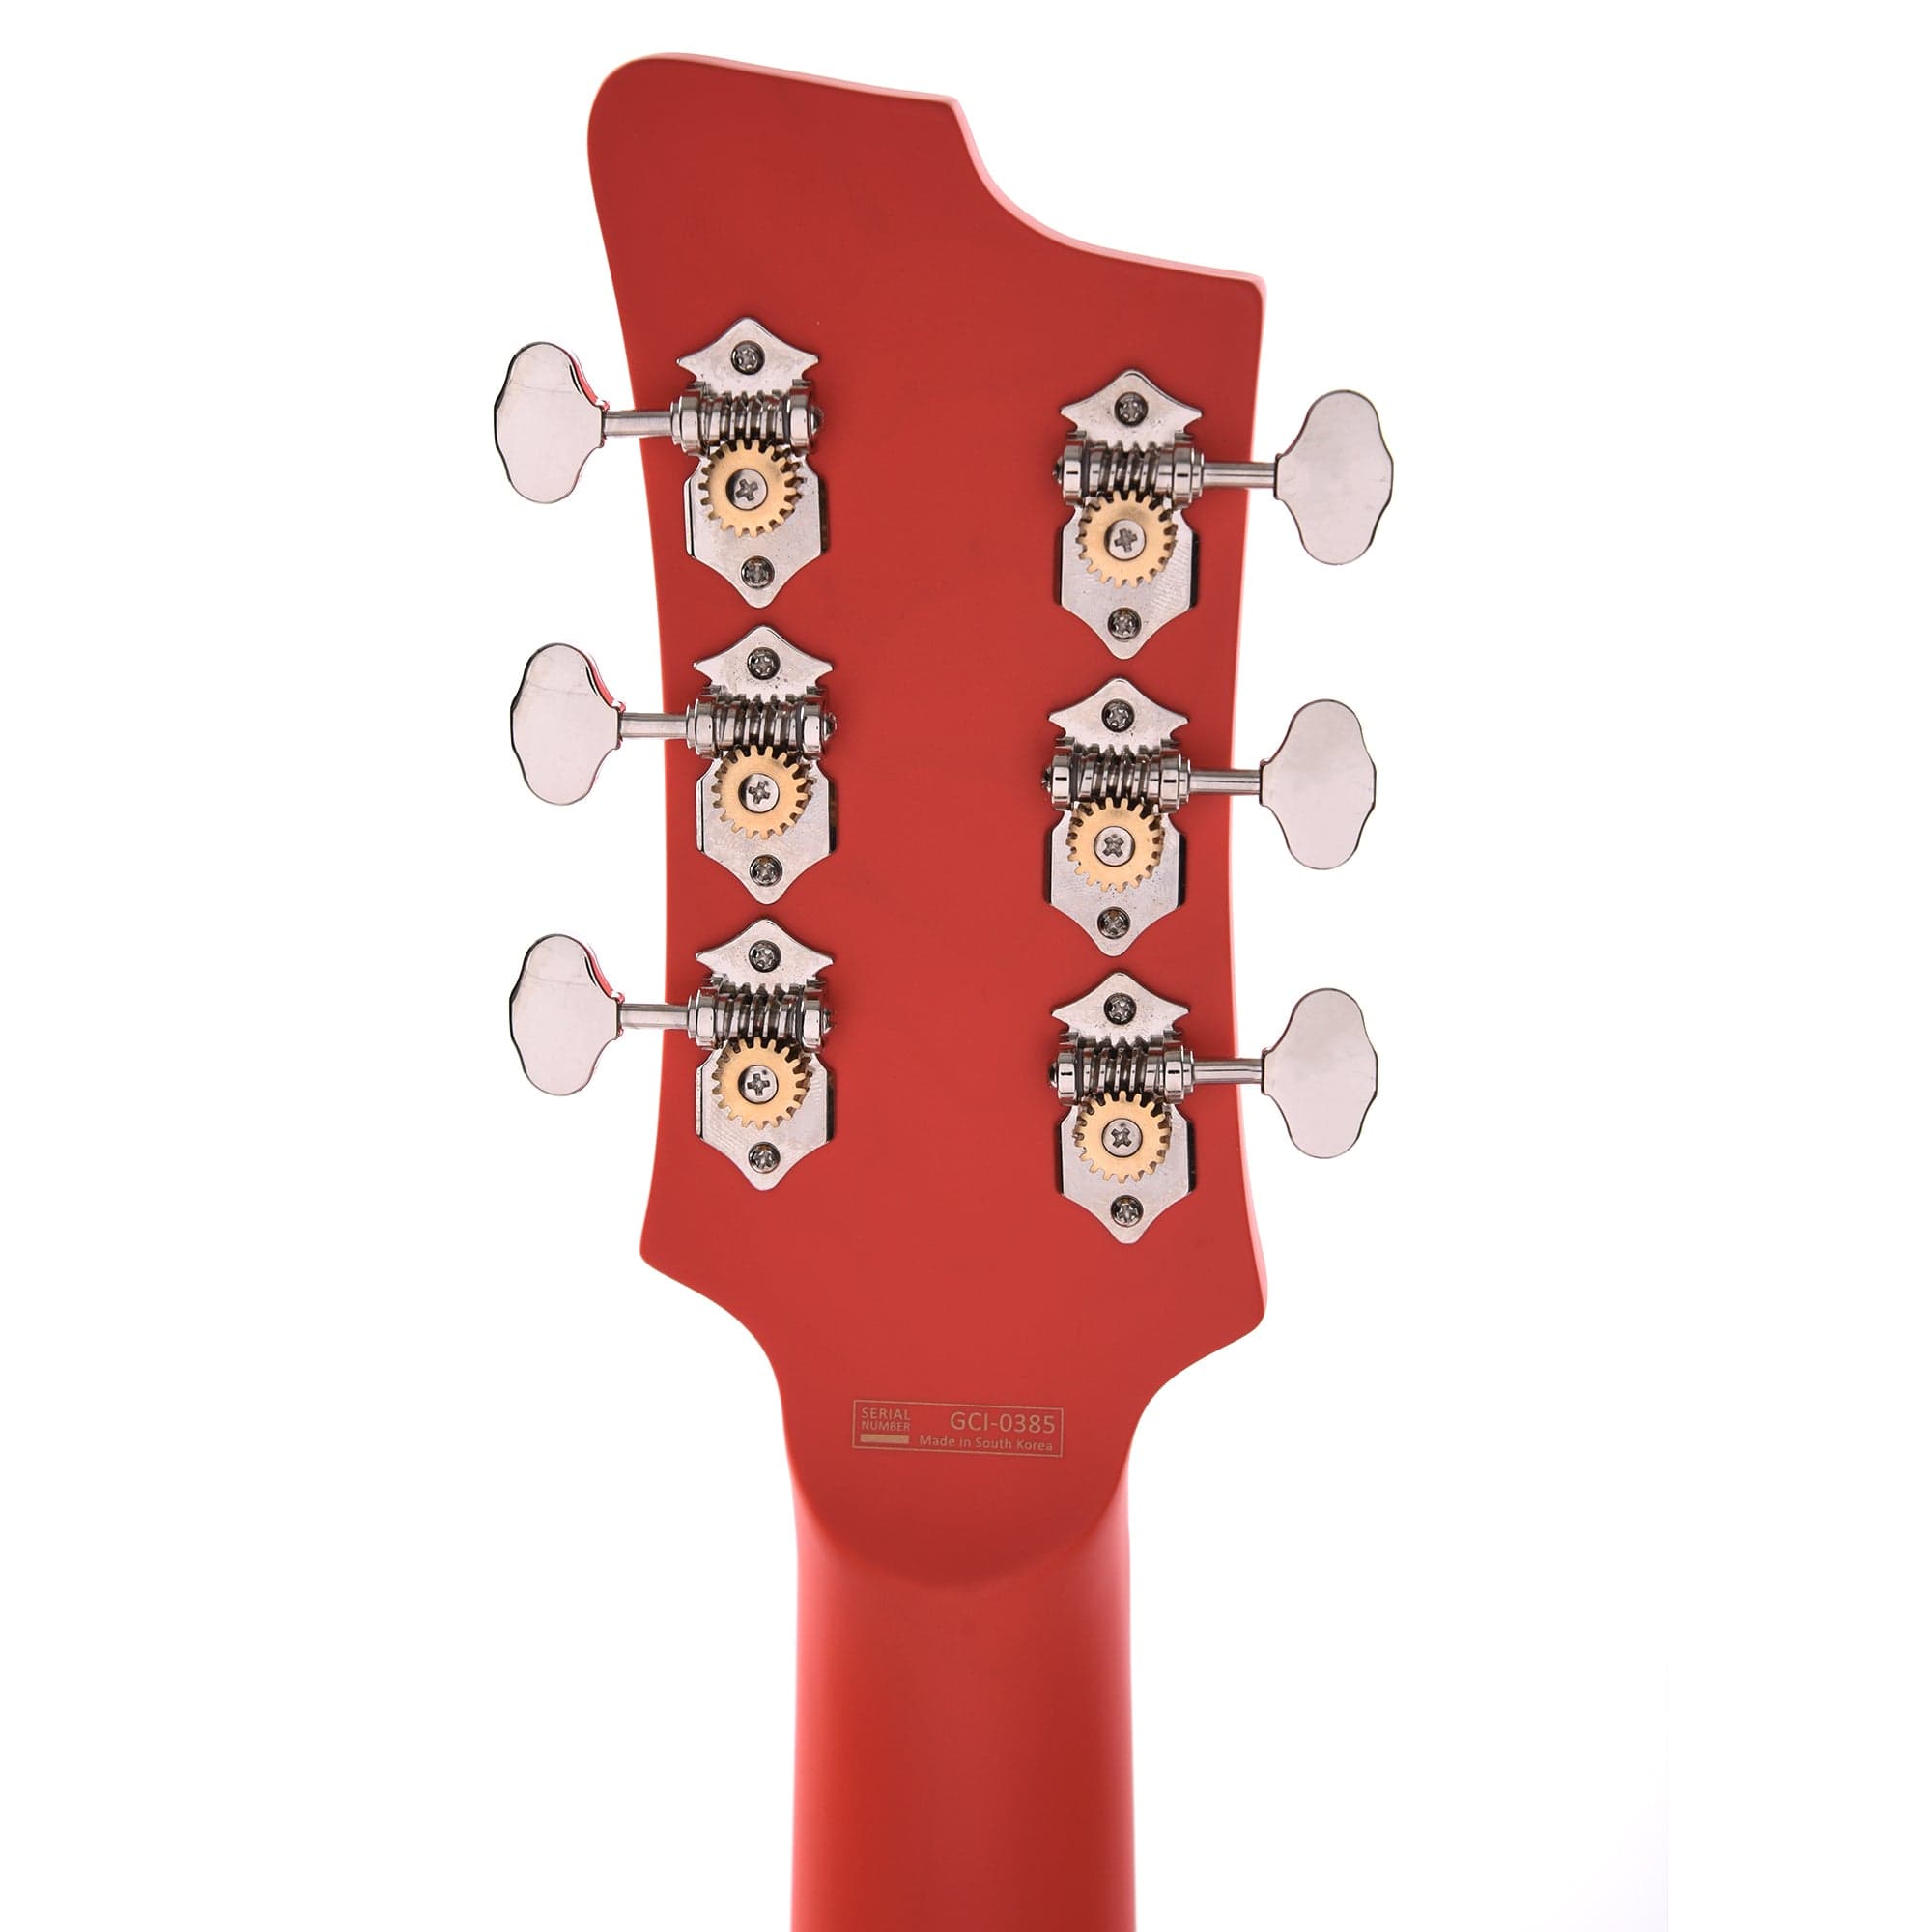 GCI Craftsman Series 4 Guitar Matte Fiesta Red